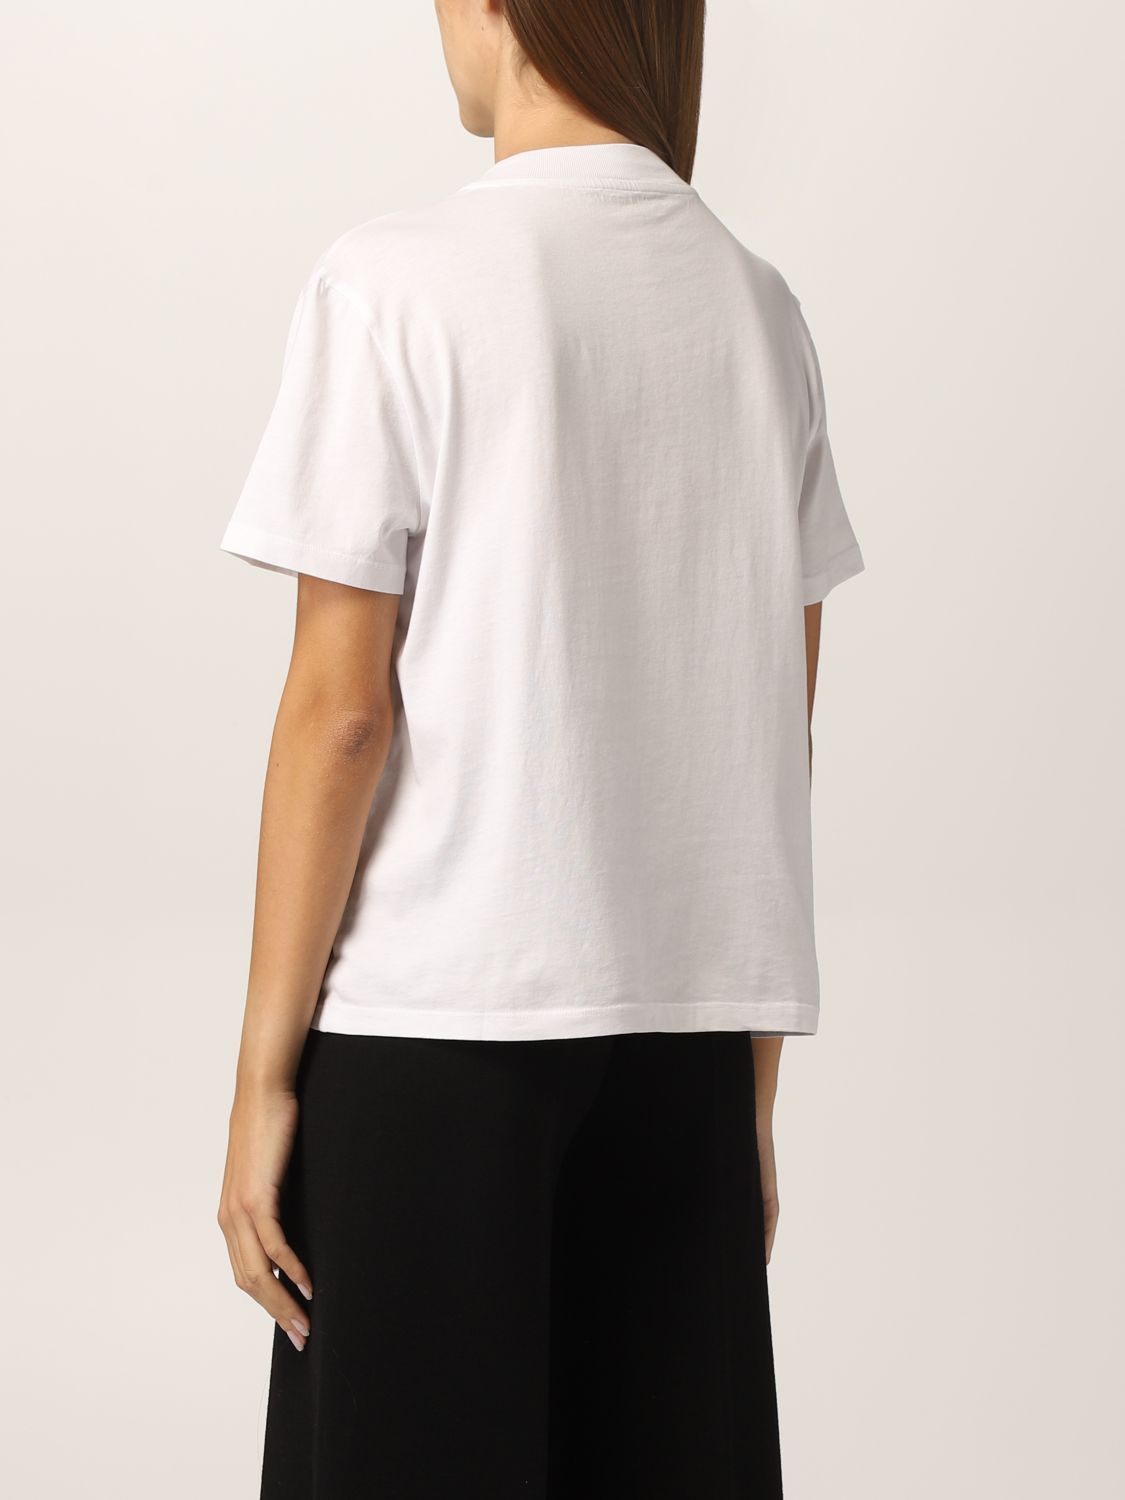 LIVIANA CONTI: cotton t-shirt with logo - White | Liviana Conti t-shirt ...